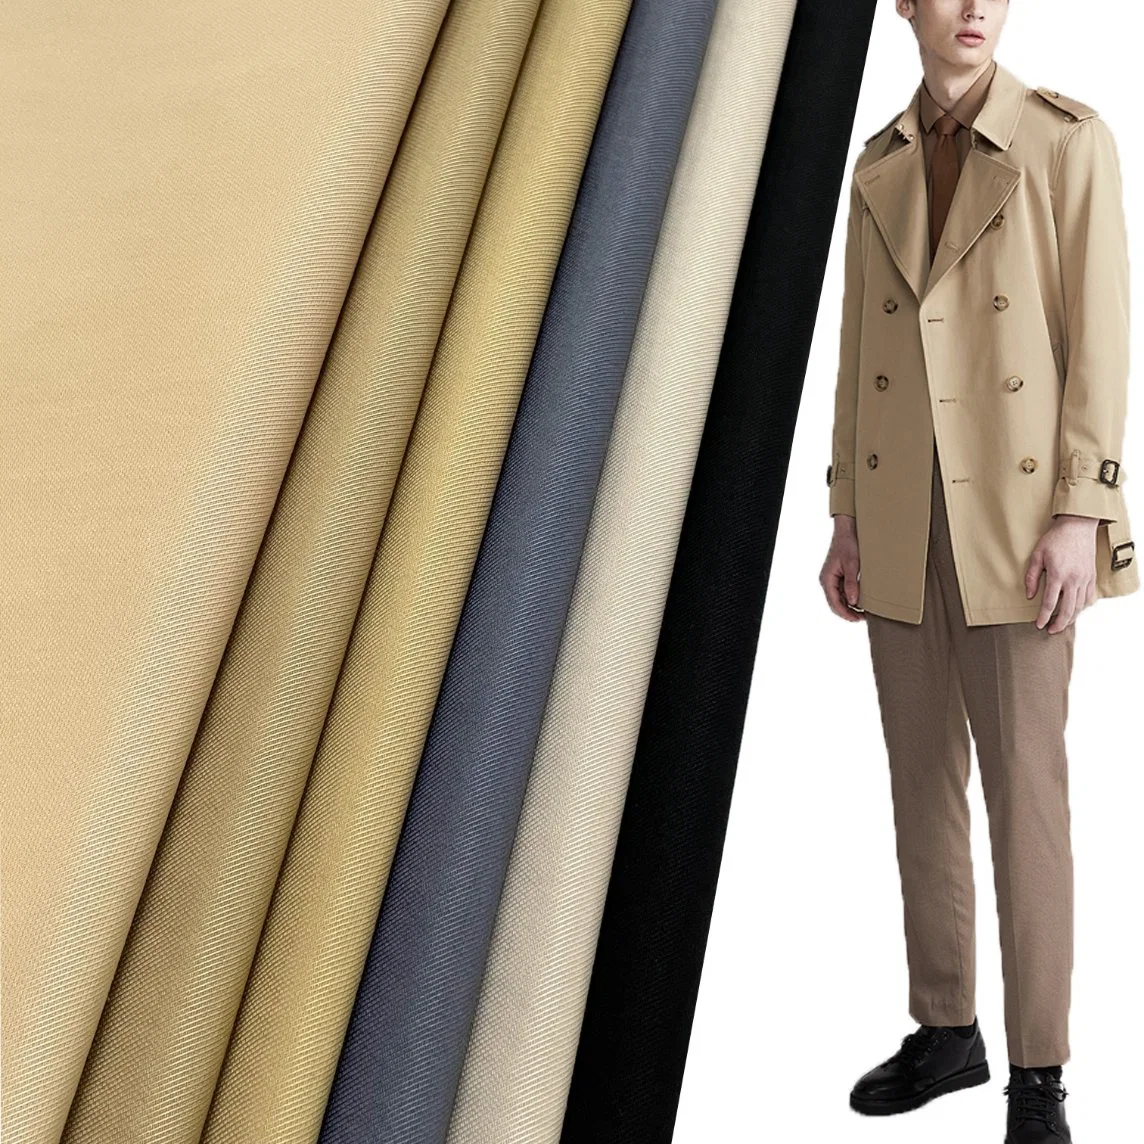 El poliéster algodón Twill impermeable de nylon tejido de alta calidad para chaqueta anorak trinchera cubra (poliéster/nylon)